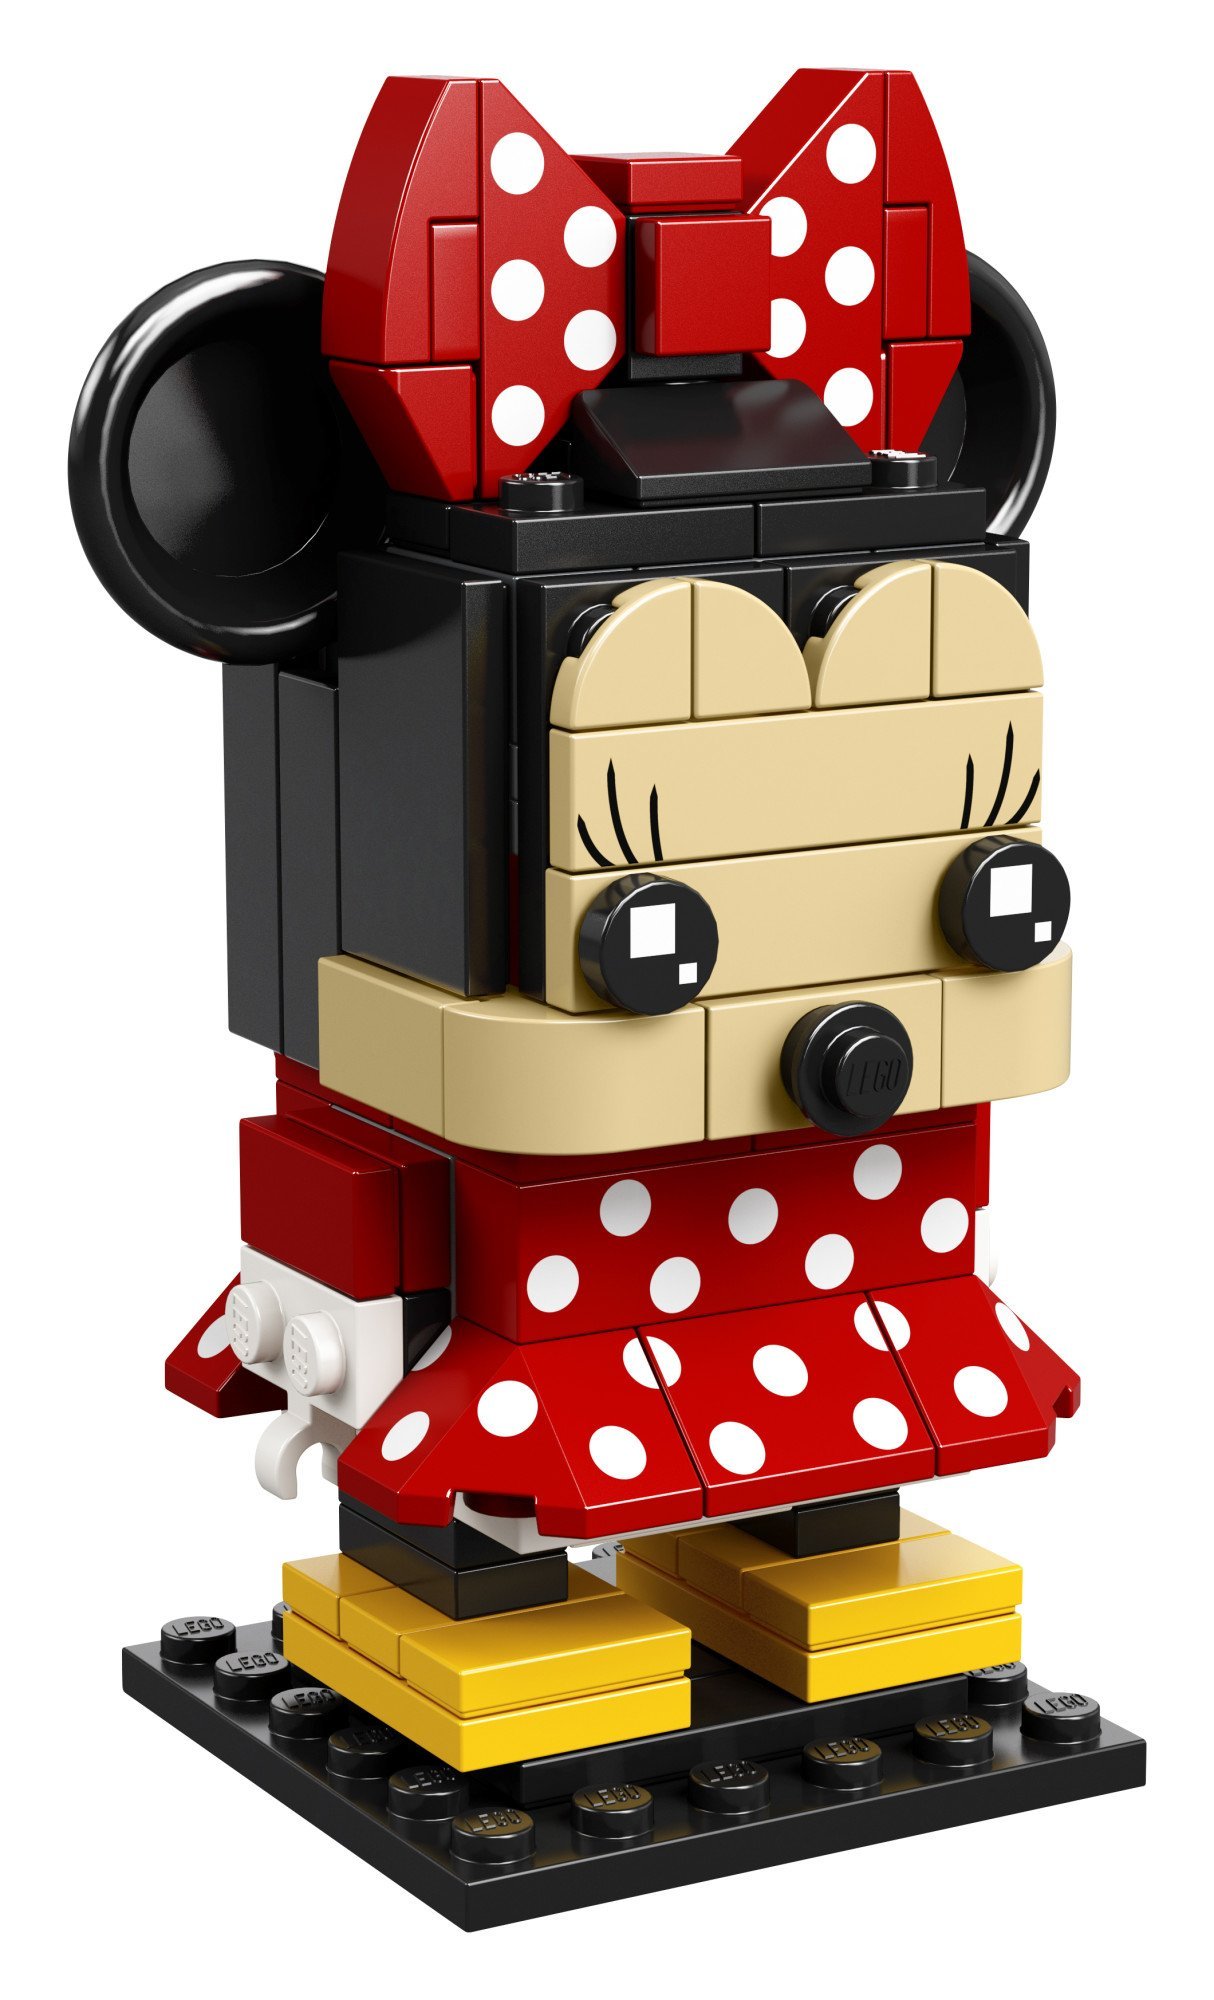 LEGO Brickheadz Minnie Mouse 41625 Building Kit (129 Piece), Multicolor